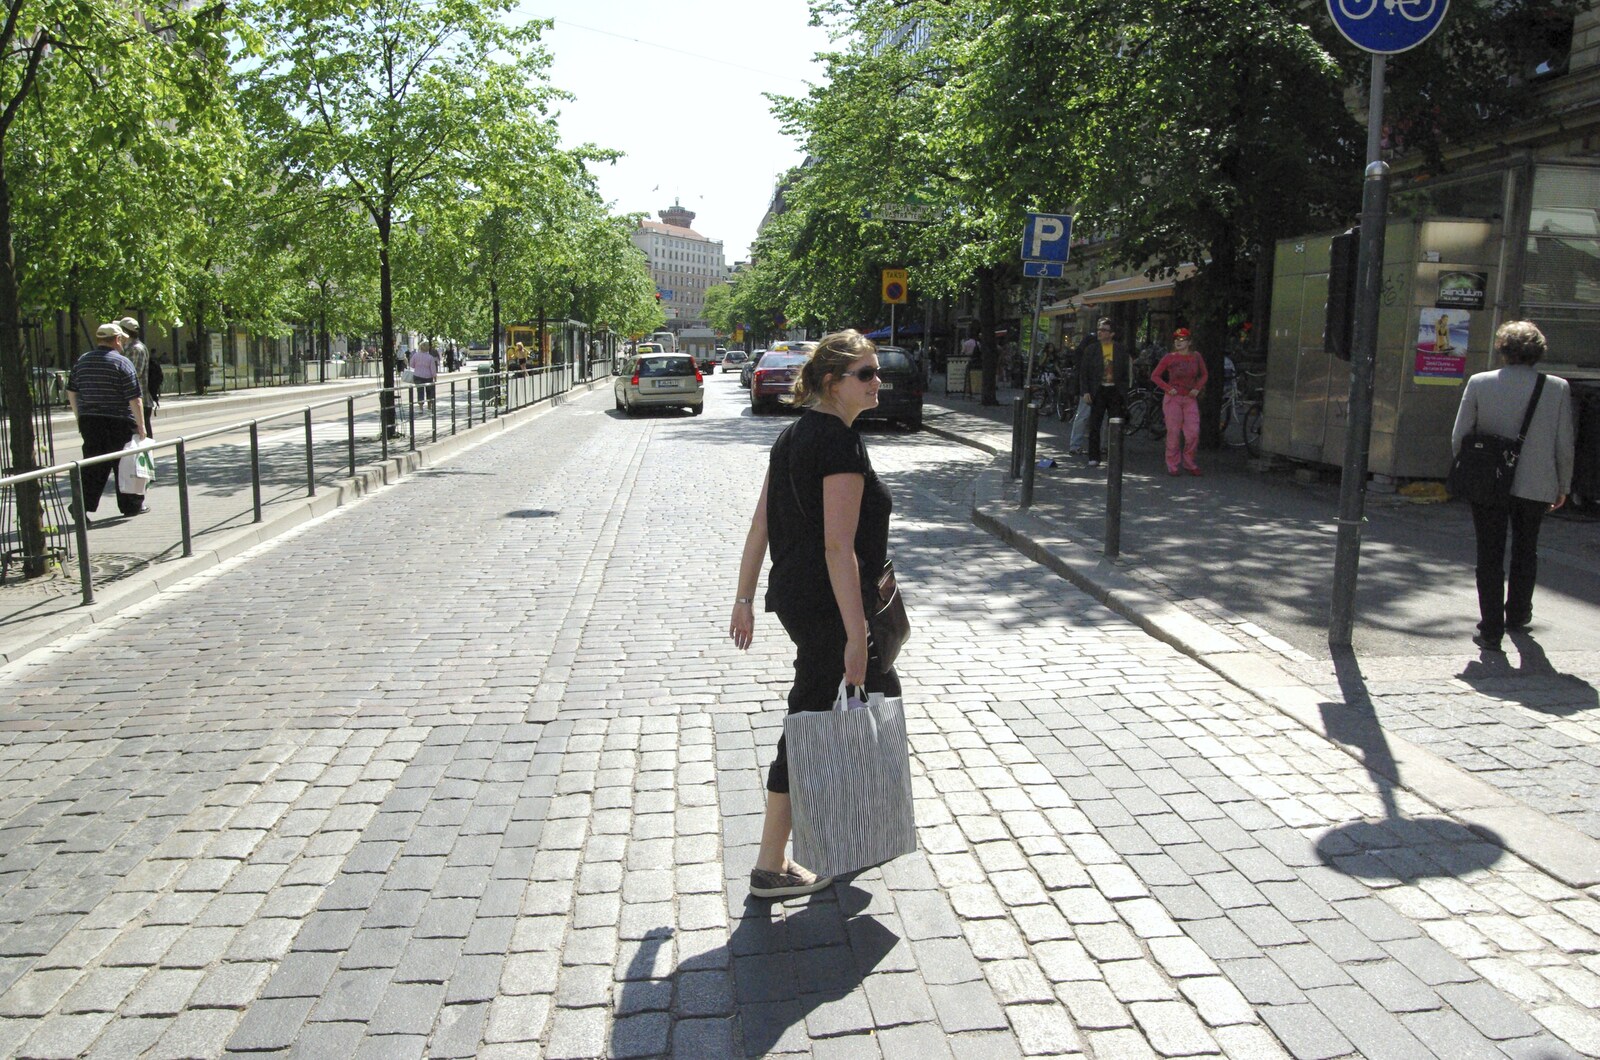 Genesis in Concert, and Suomenlinna, Helsinki, Finland - 11th June 2007: Isobel crosses the cobbled street